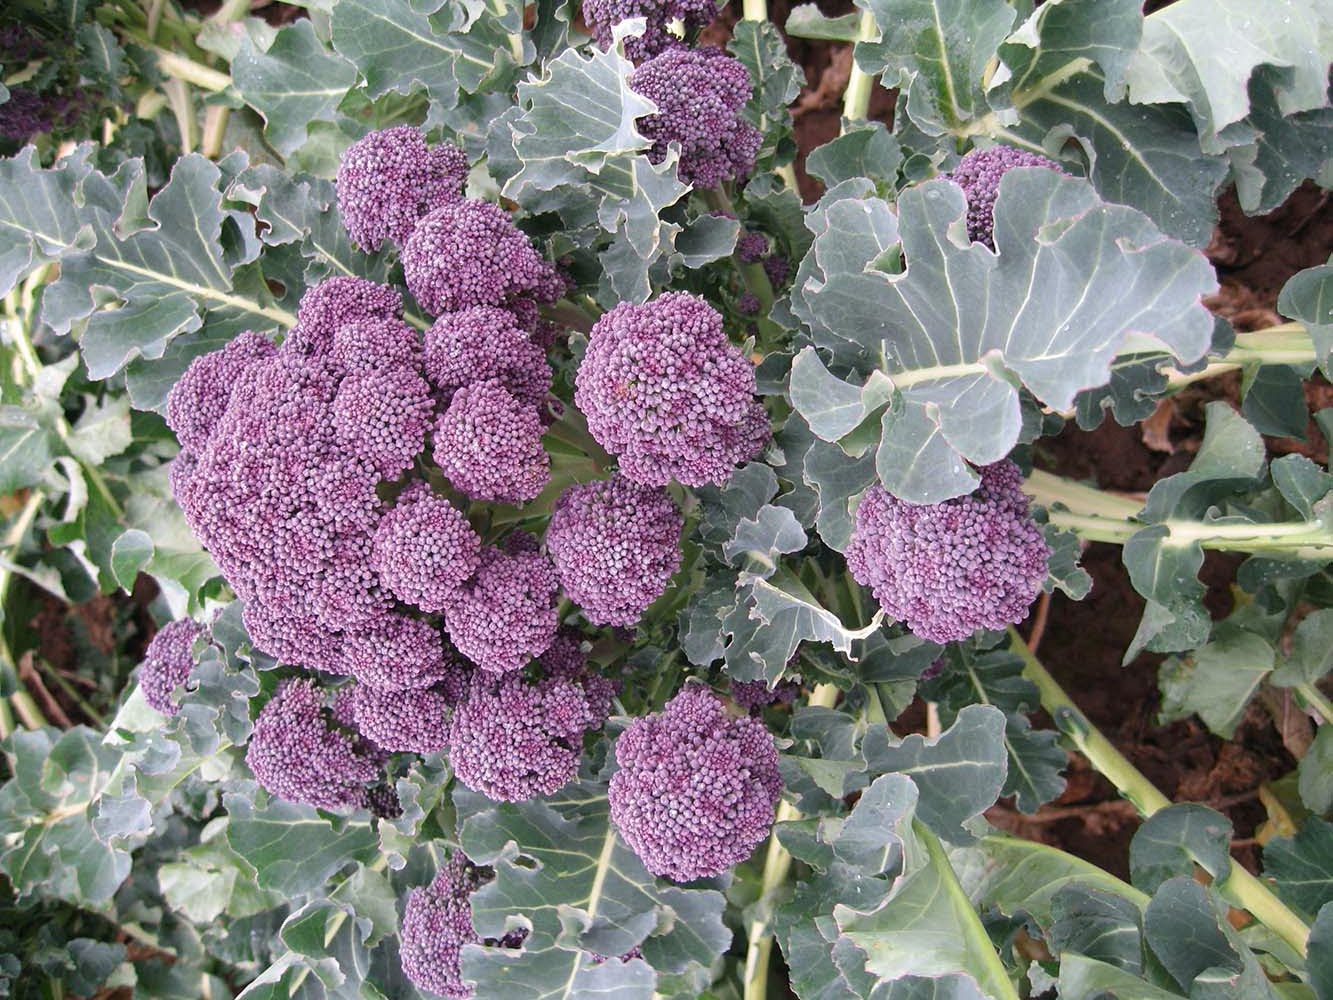 Different Types of Broccoli: Santee Broccoli